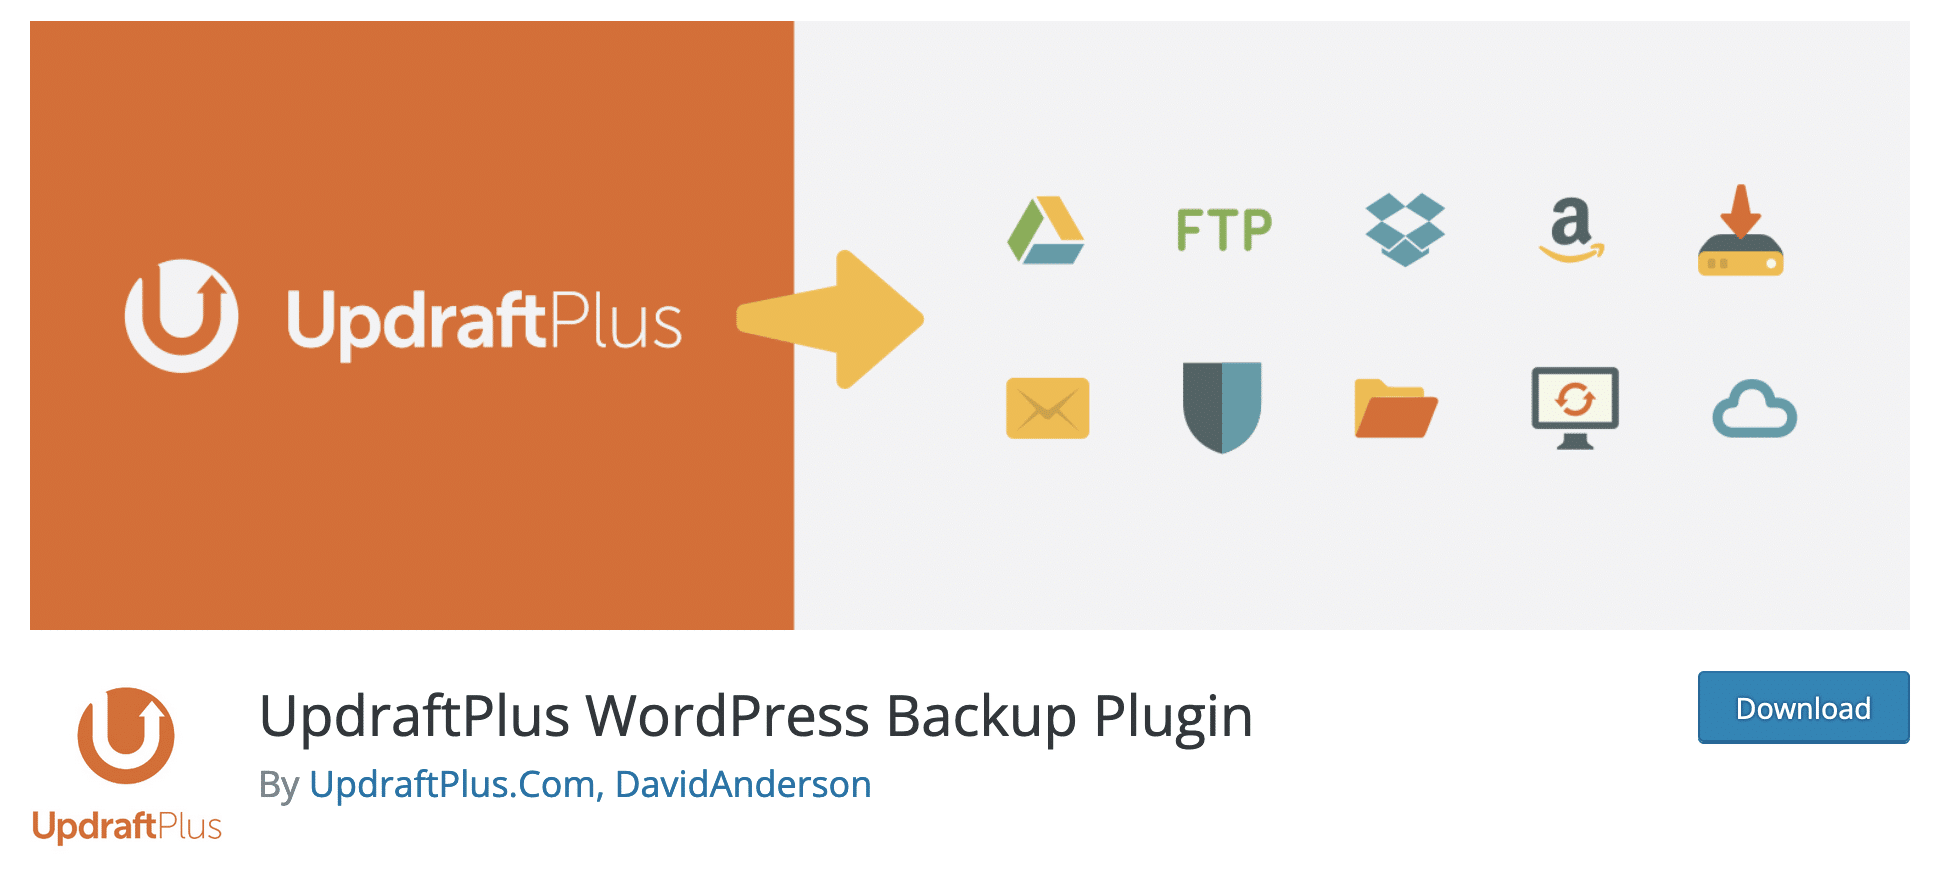 UpdraftPlus WordPress Backup plugin allows to backup your sites. 